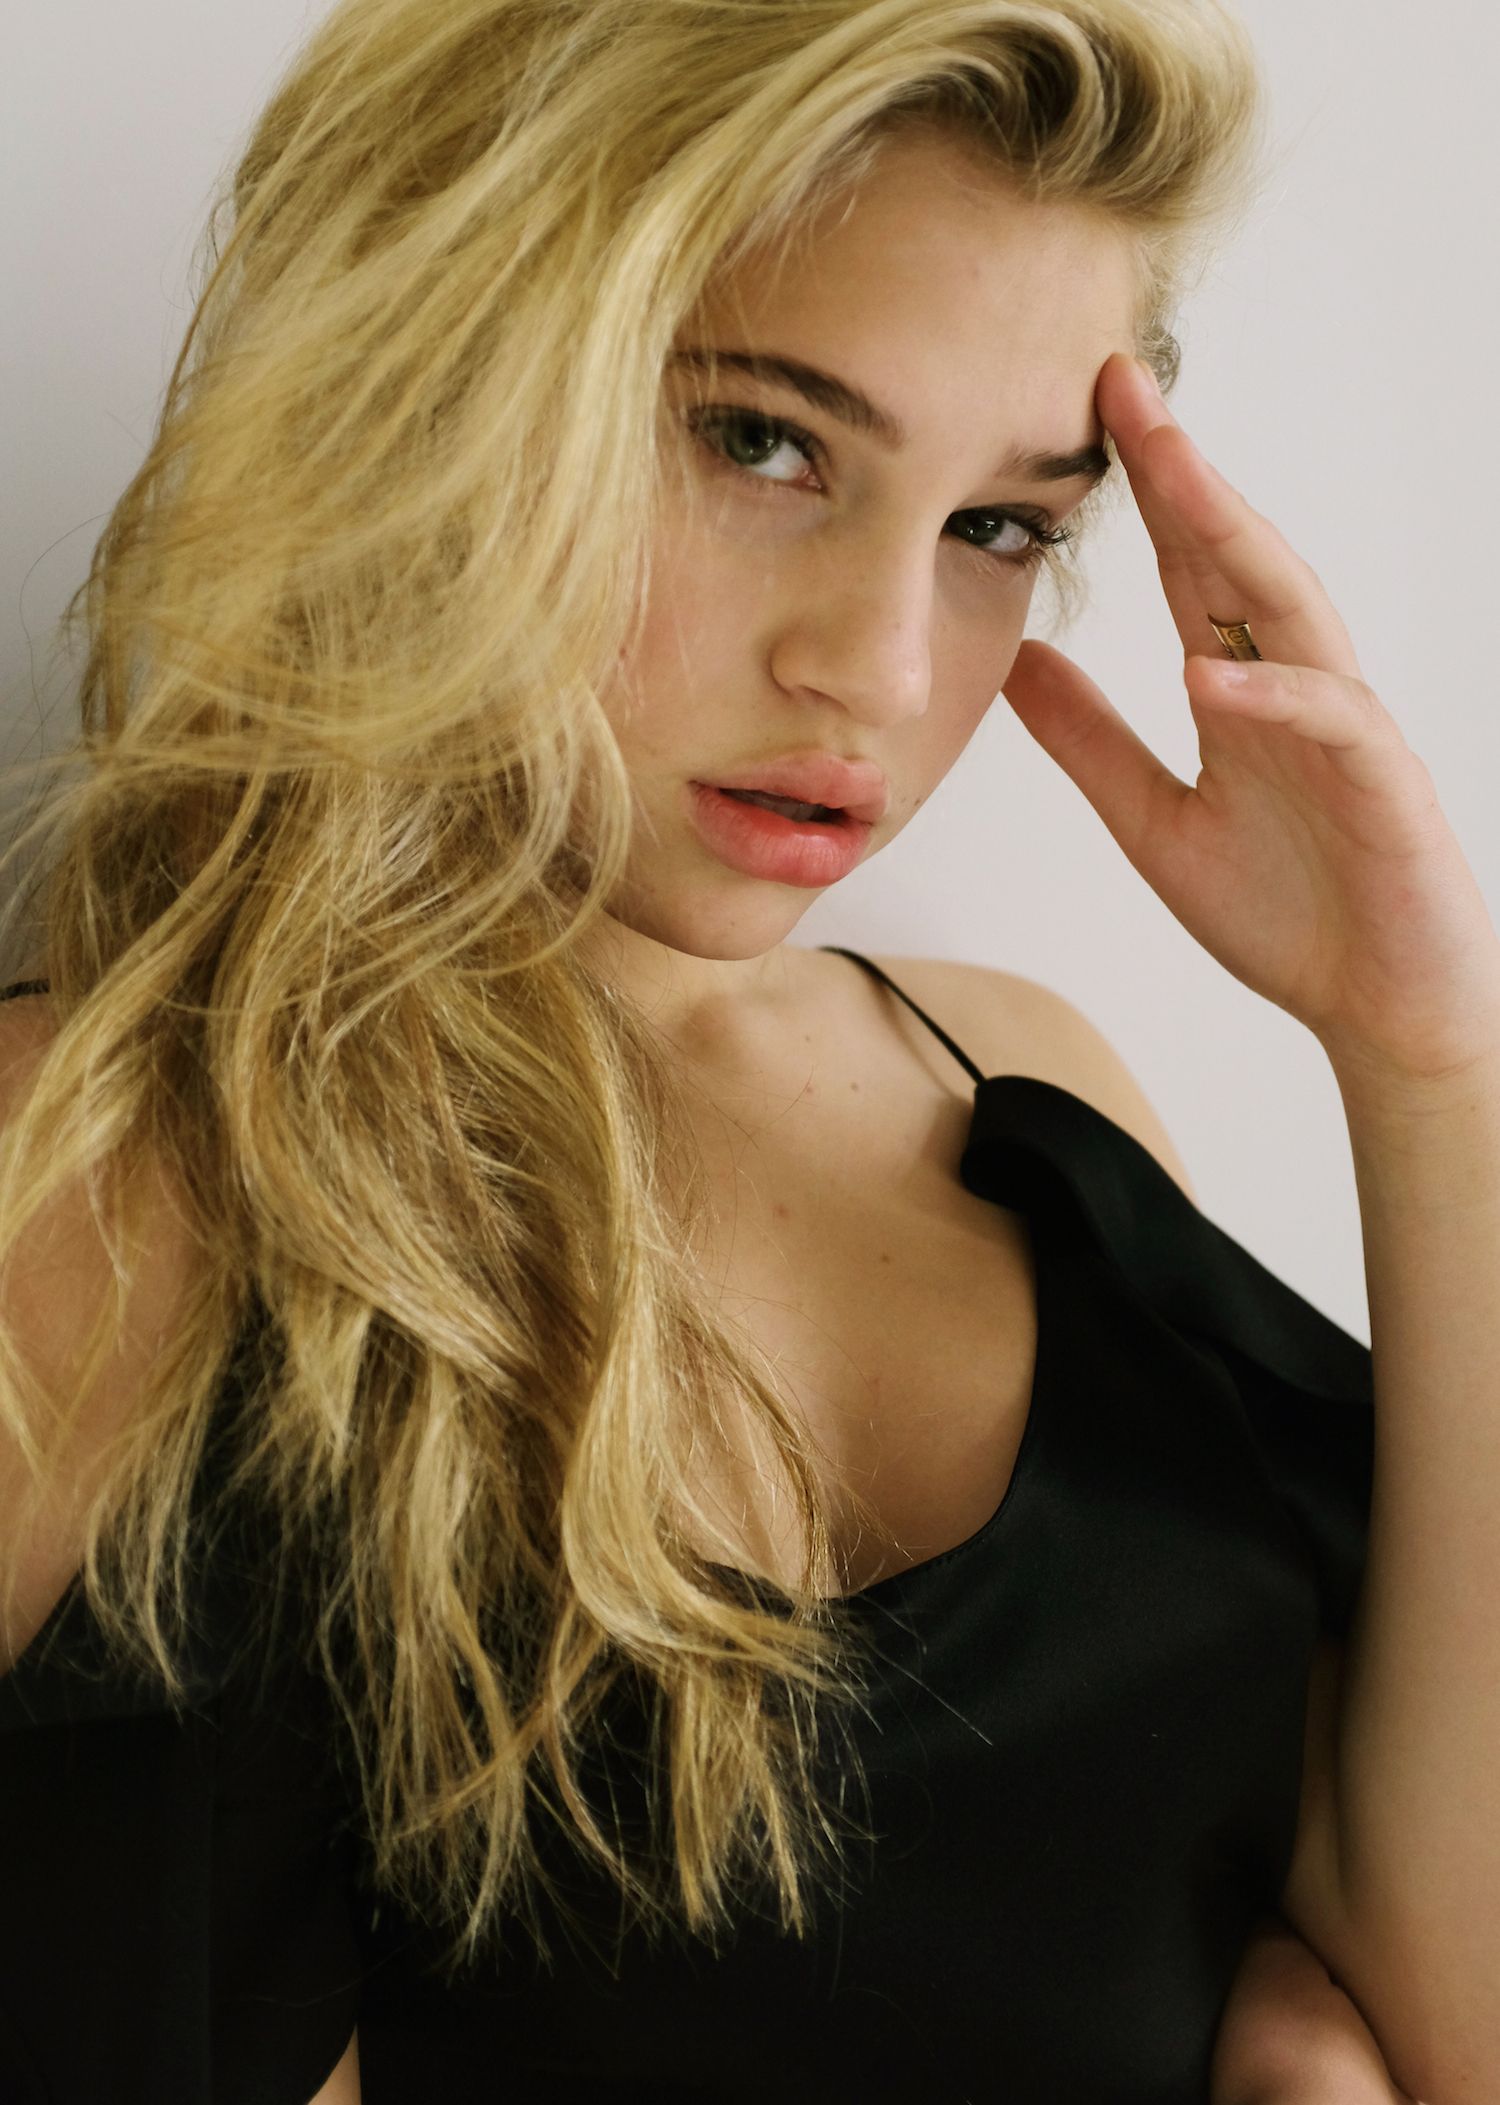 Meet Atlanta Model Meredith Mickelson